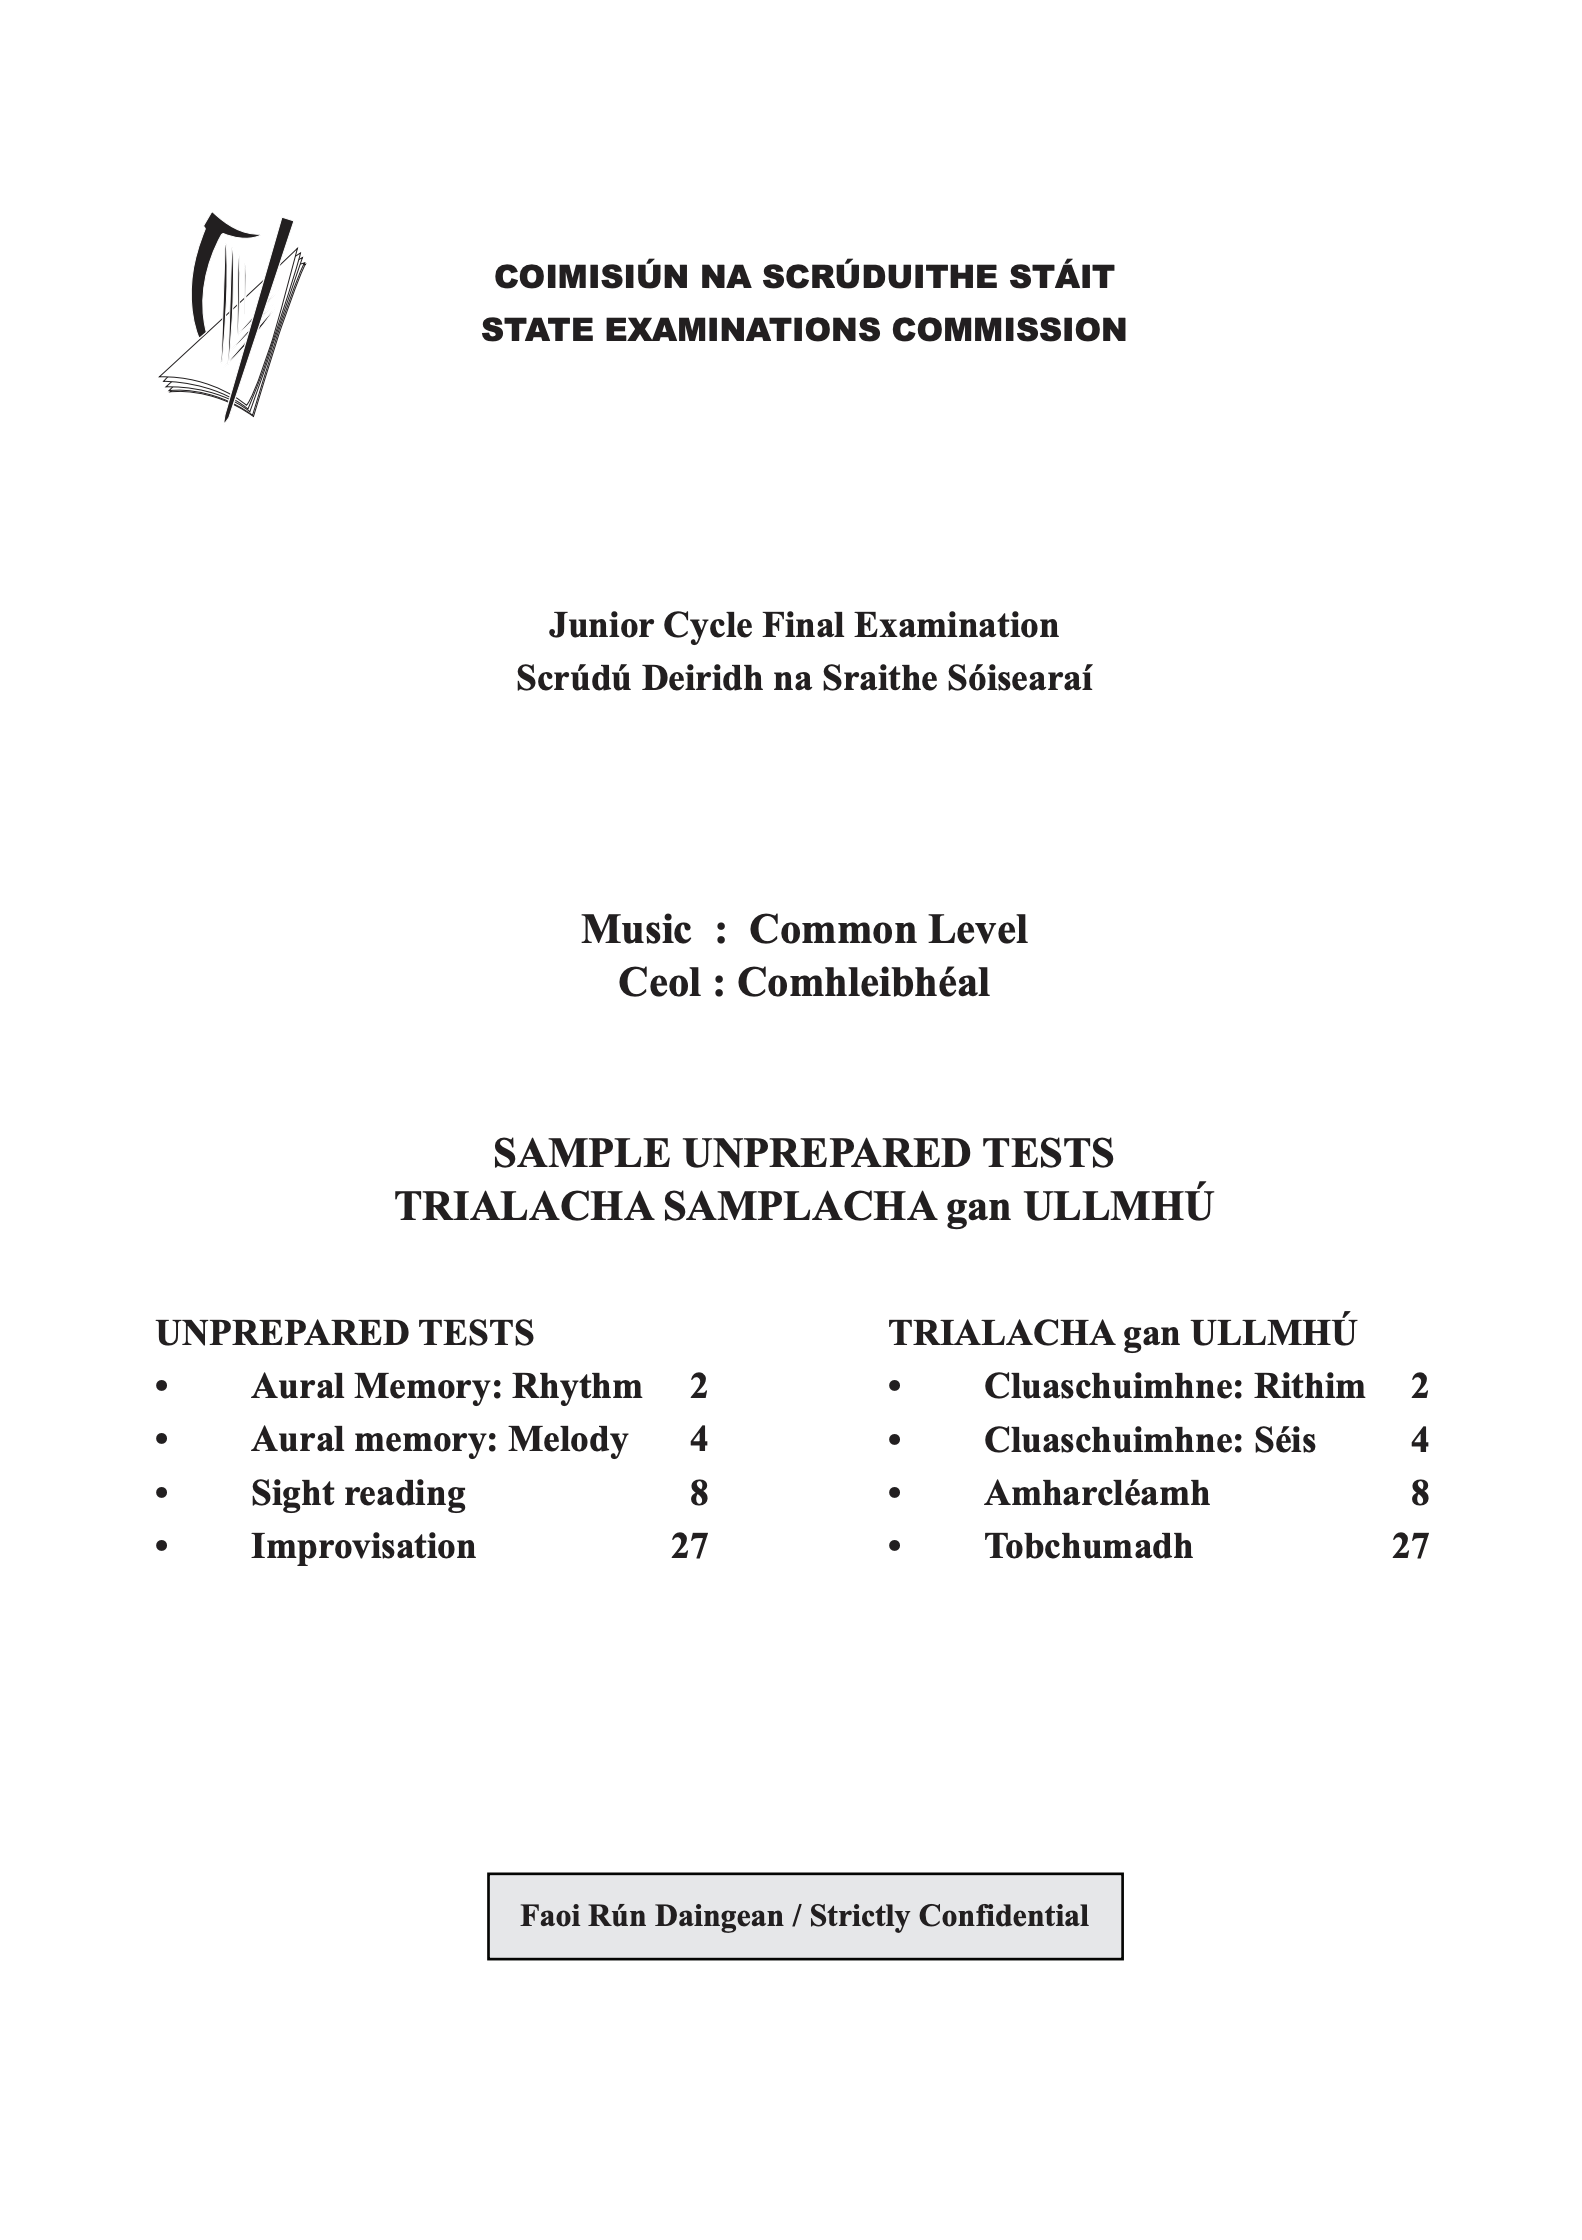 Junior Cycle Music Sample Unprepared Tests